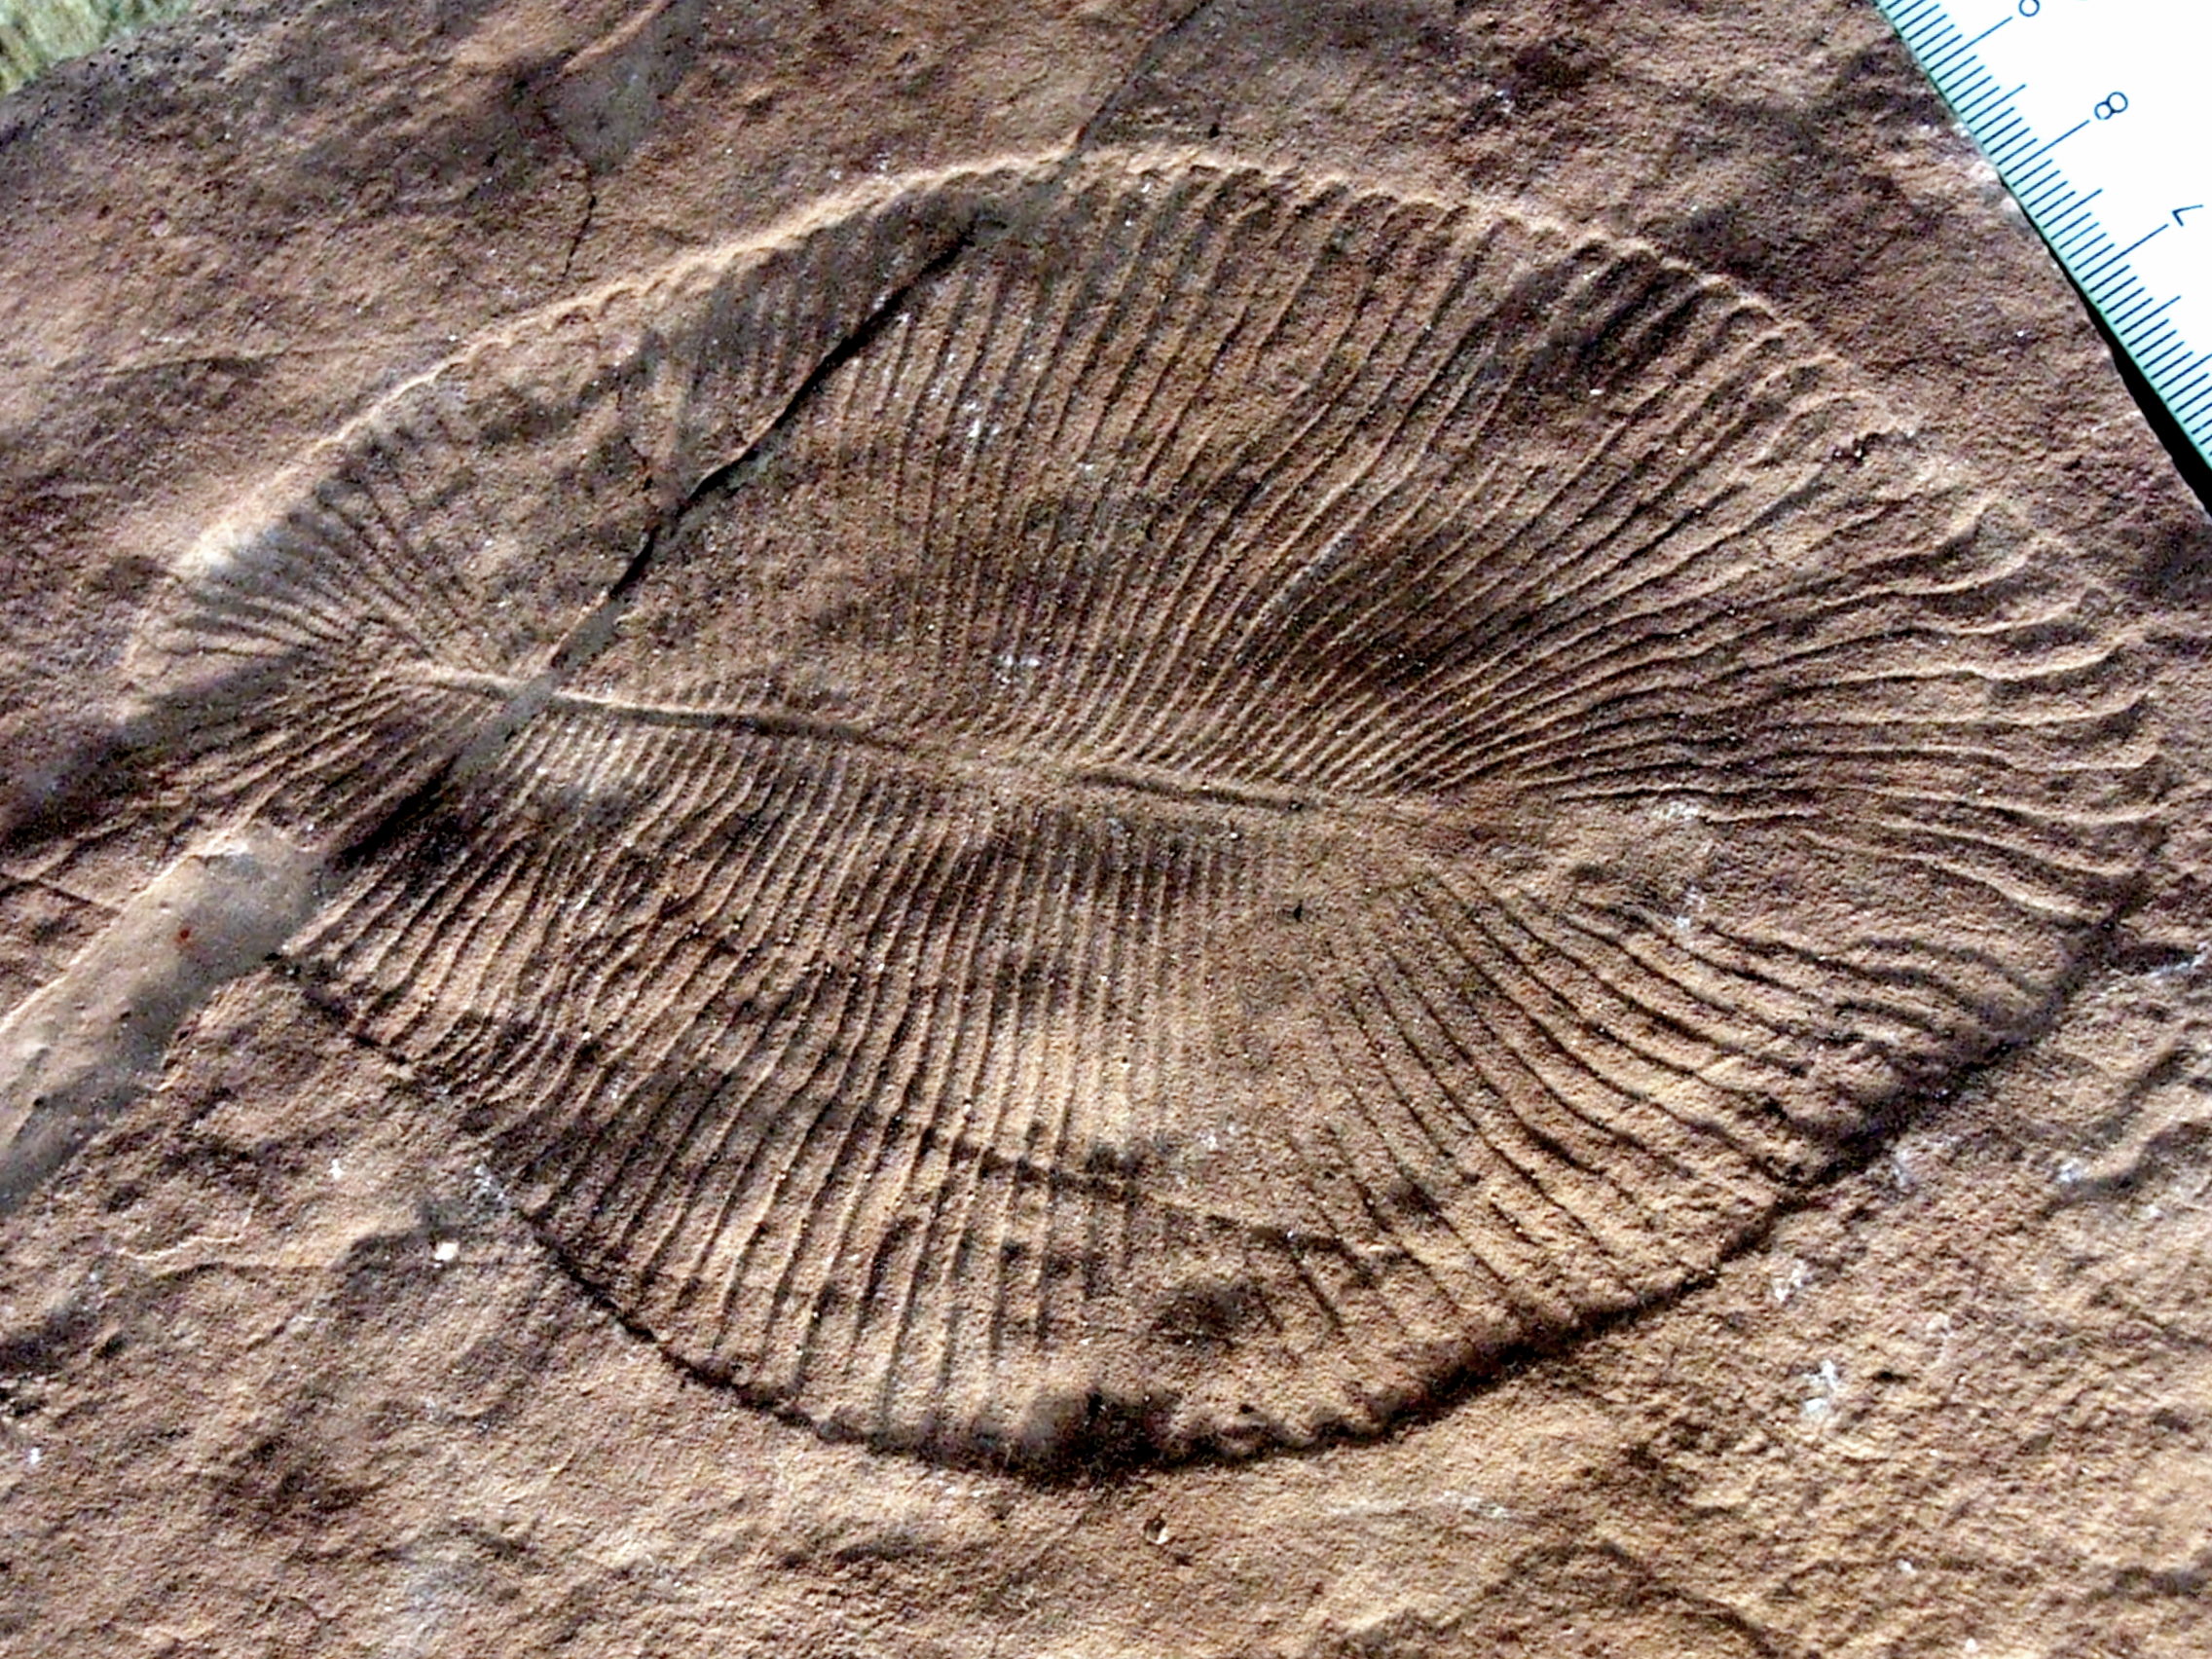 Dickinsonia costata from the Ediacaran biota (c. 635–542 MYA) is one of the earliest animal species known.